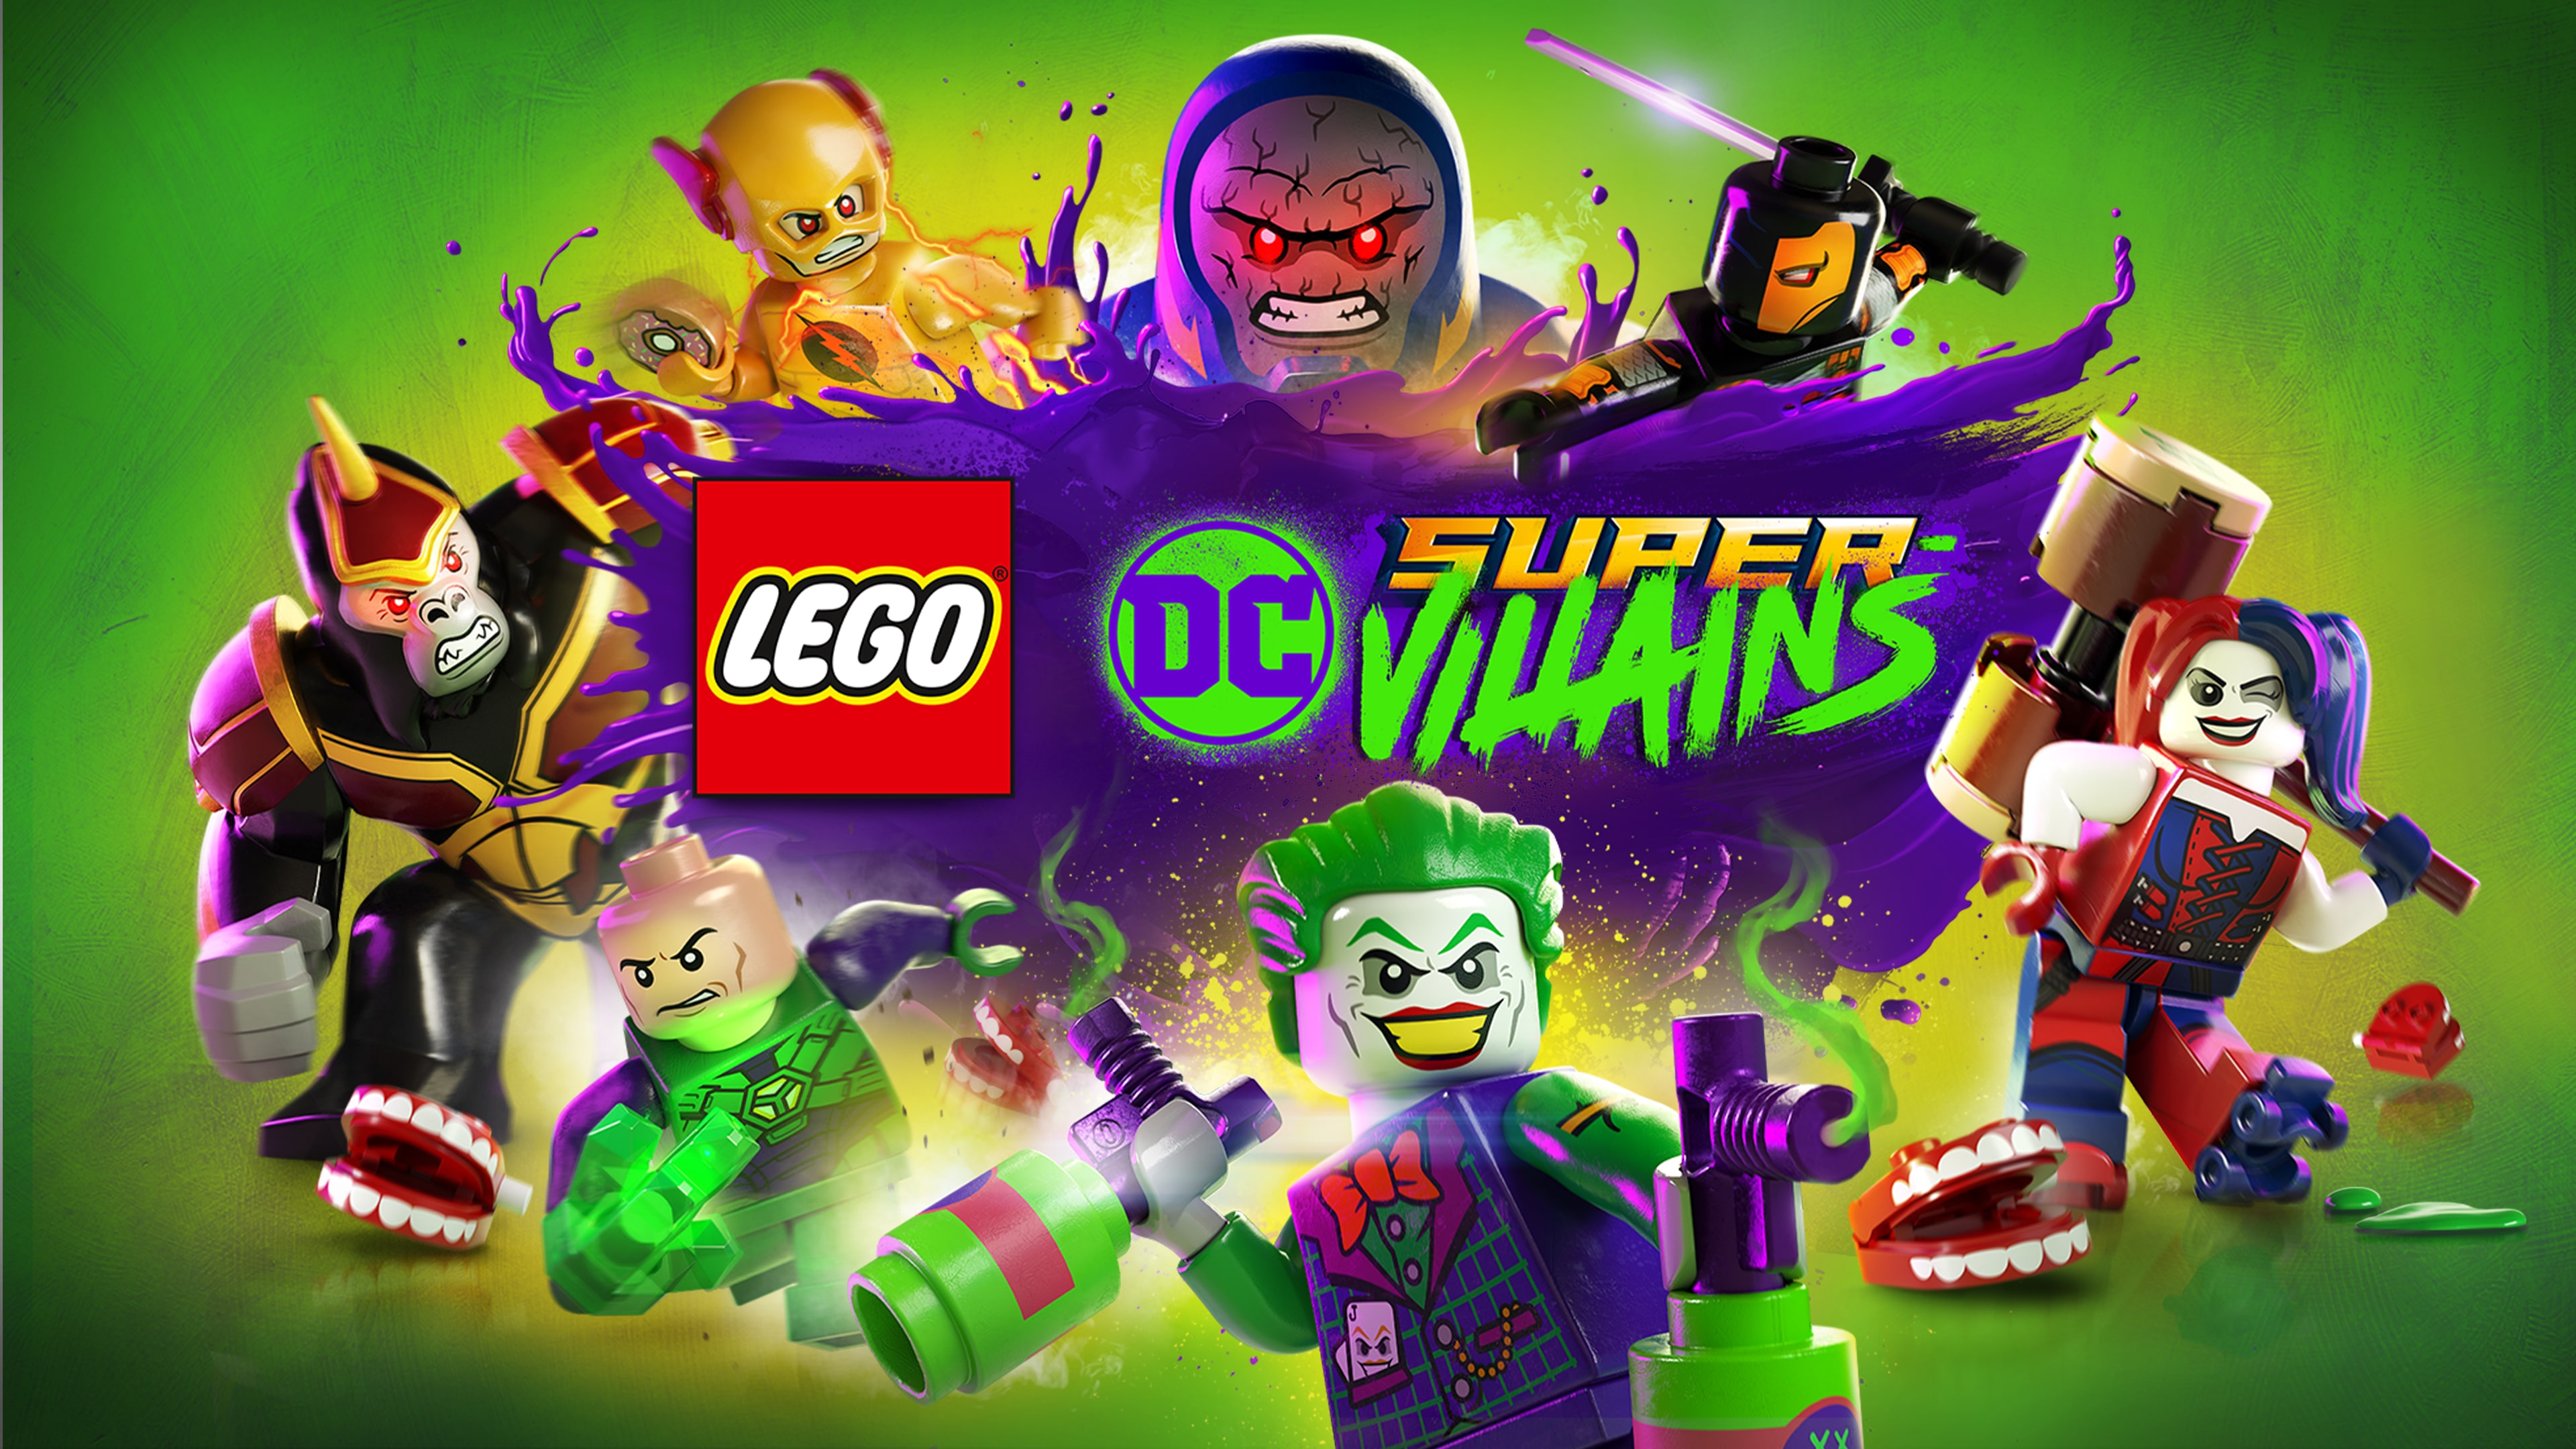 LEGO® DC Super-Villains Deluxe Edition